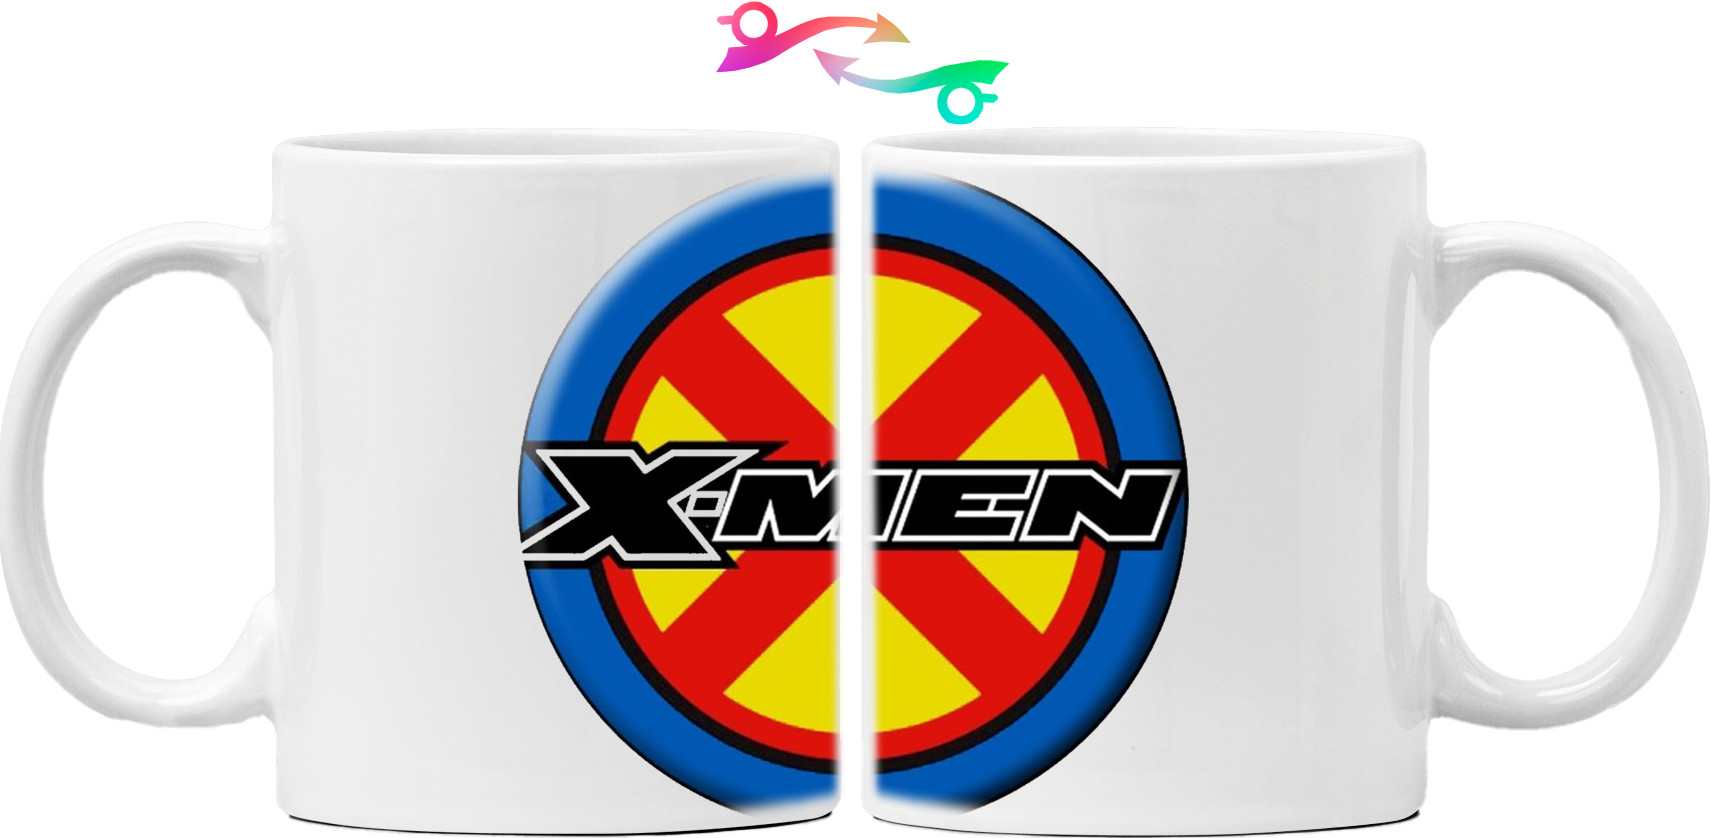 X-men